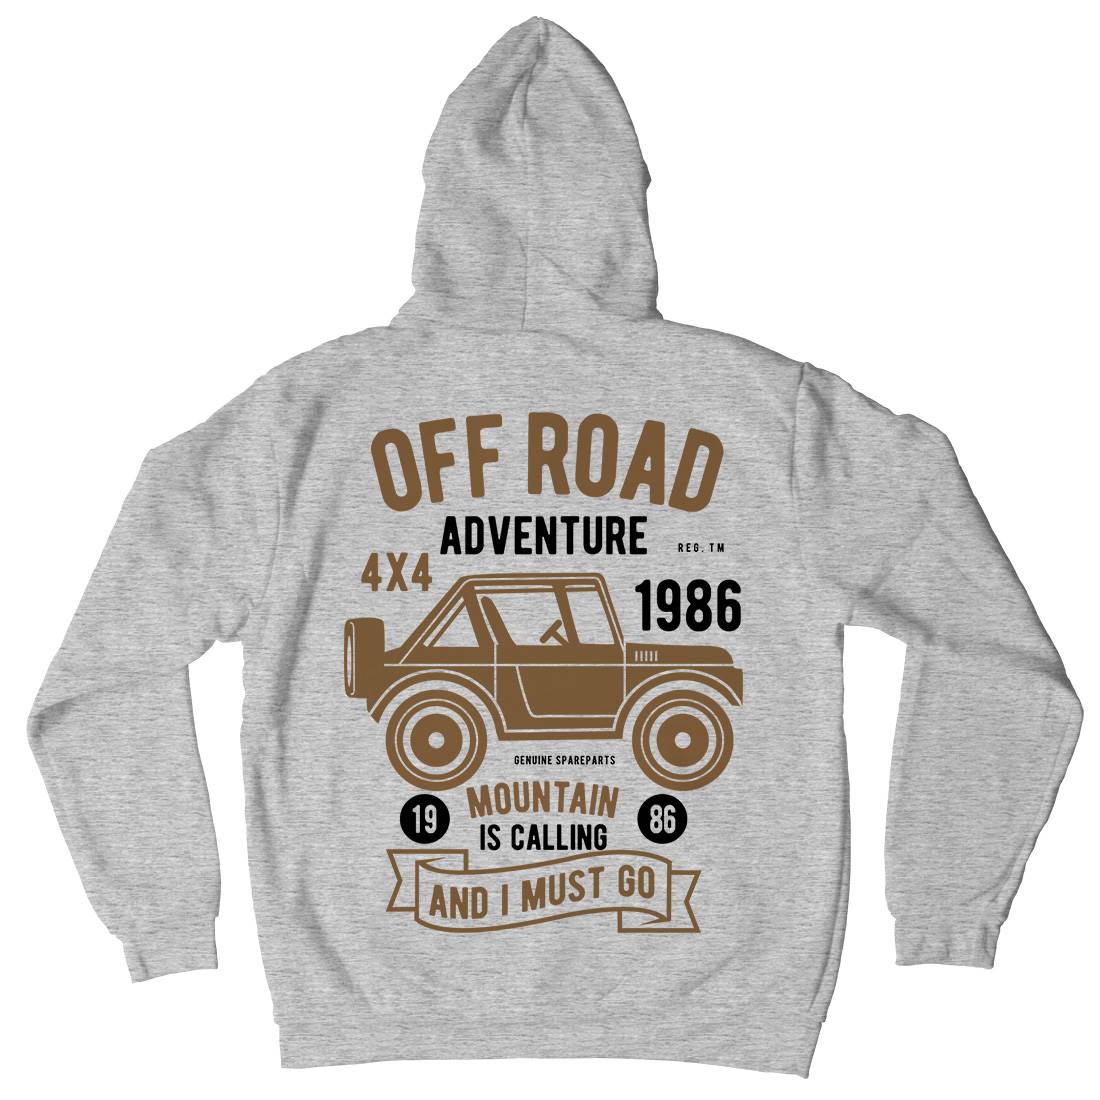 Off Road Adventure Mens Hoodie With Pocket Cars B432